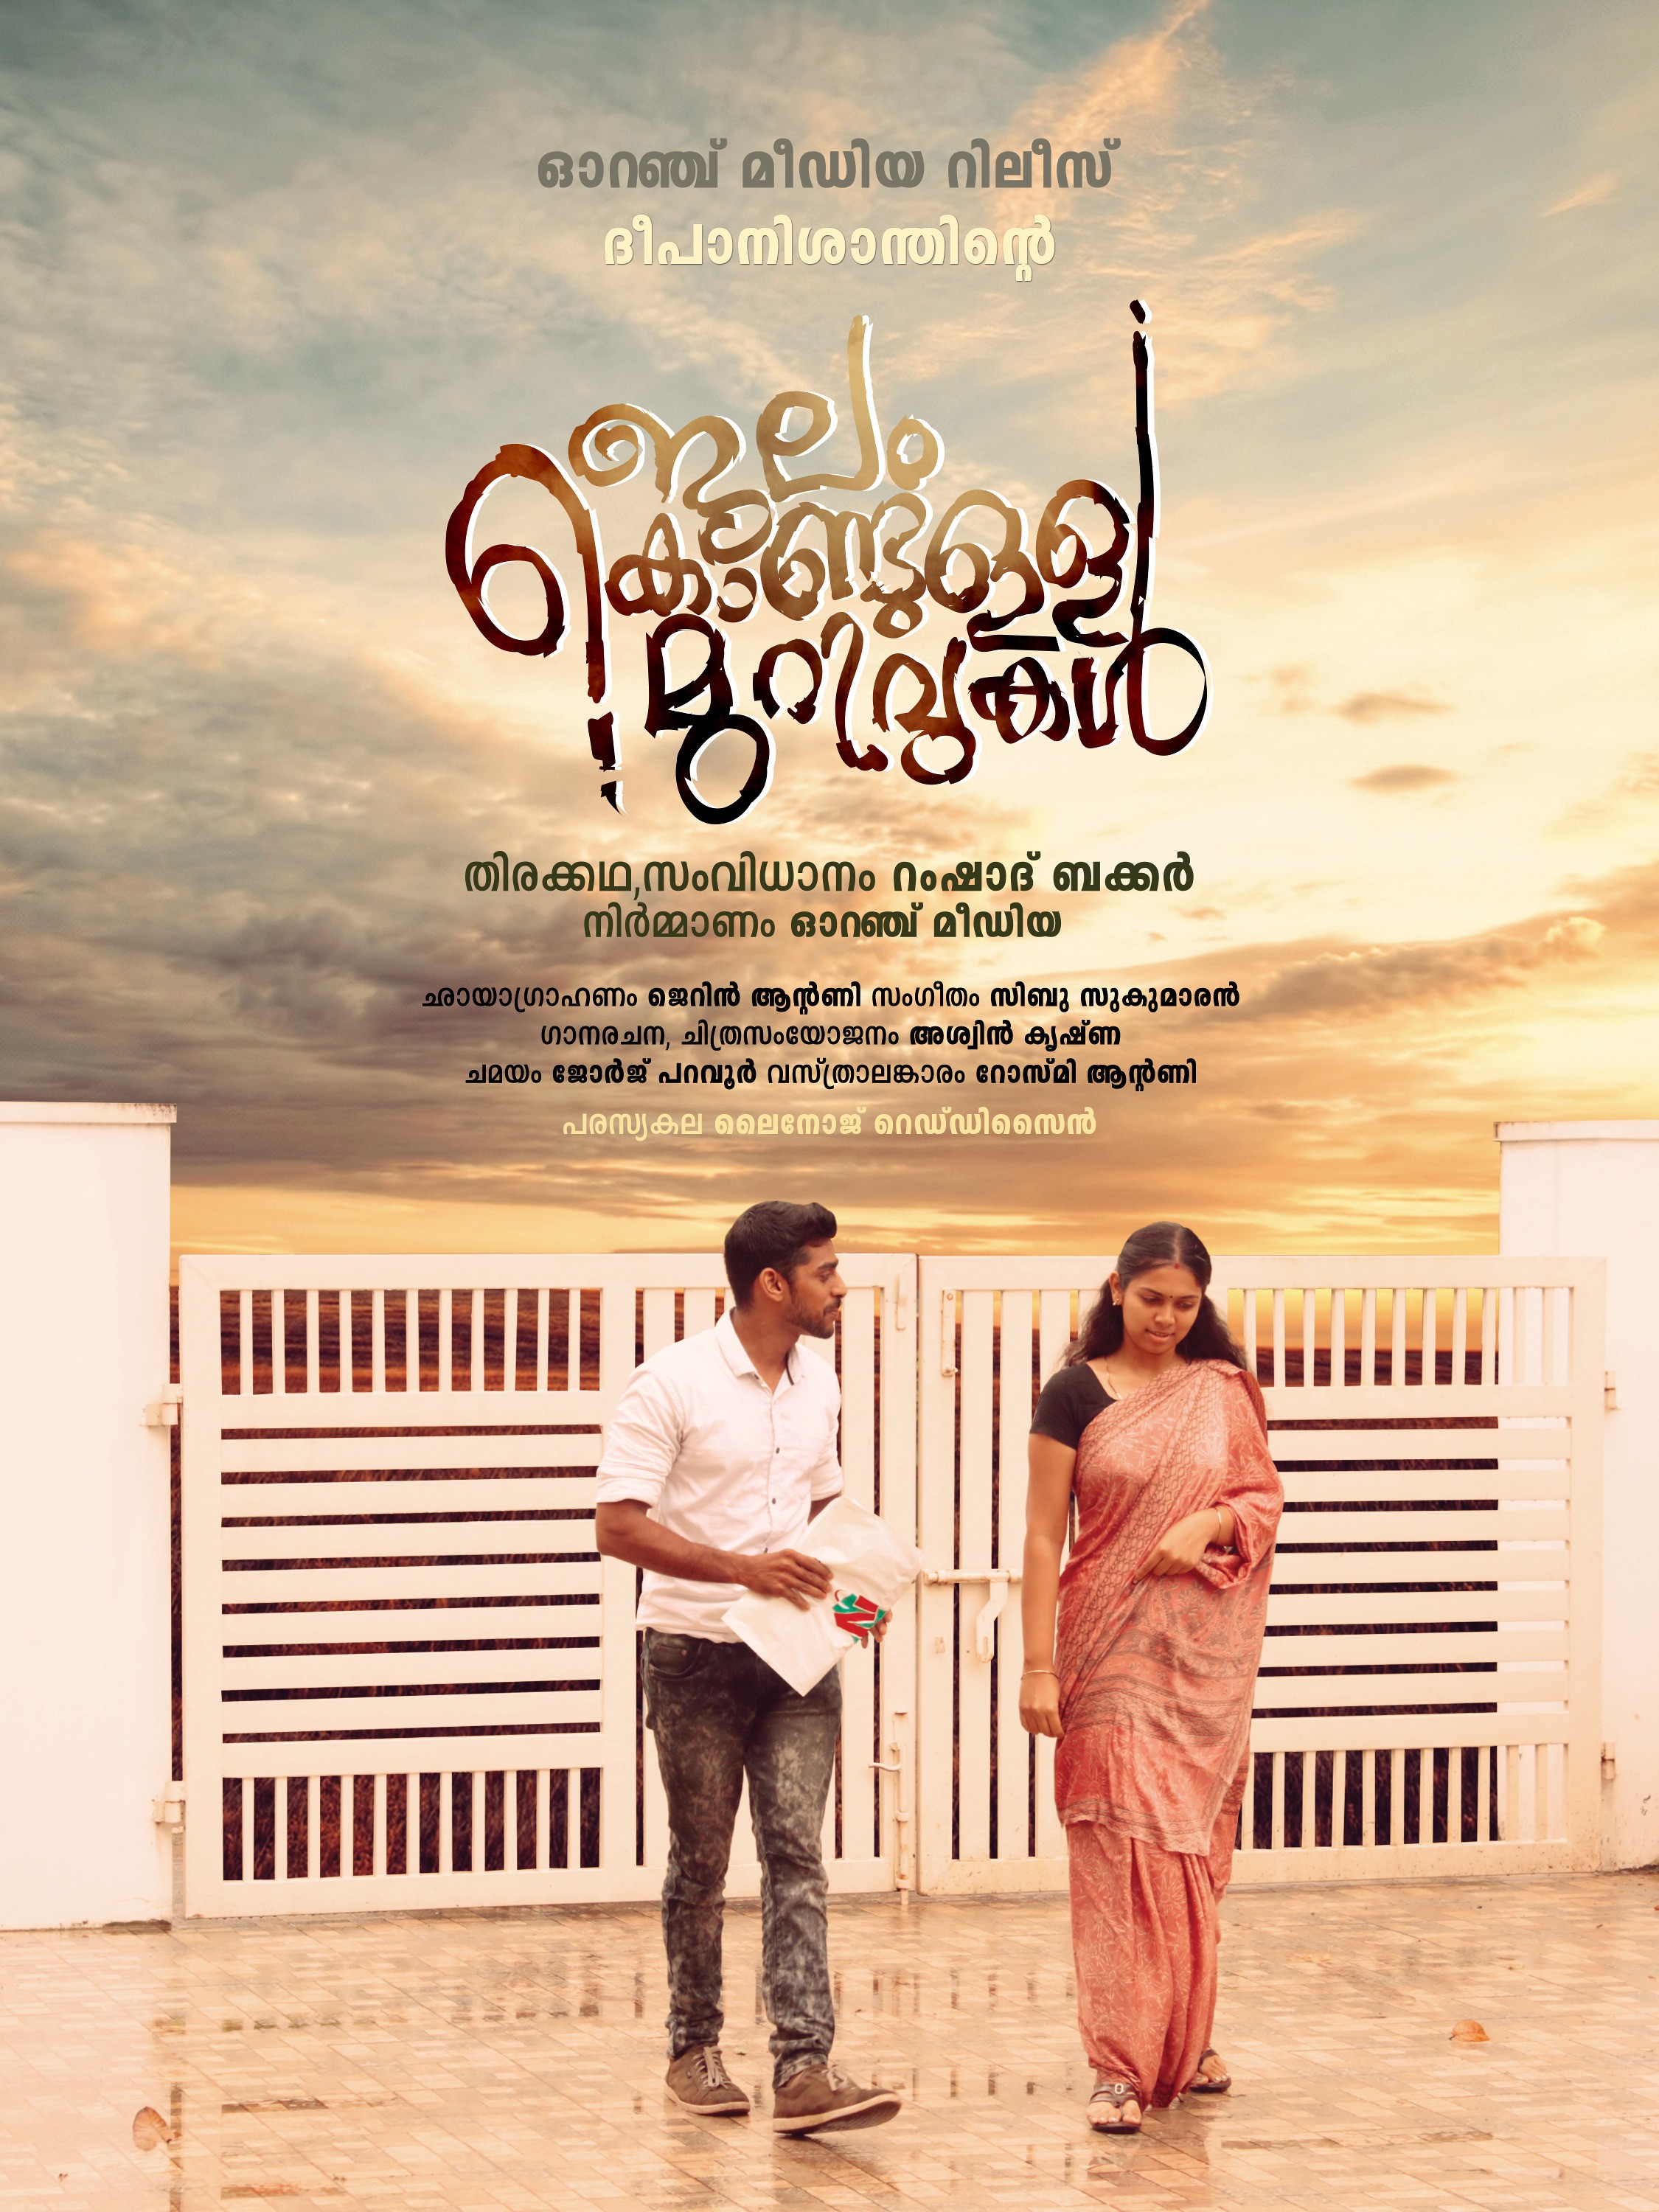 Mega Sized Movie Poster Image for Jalam Kondulla Murivukal